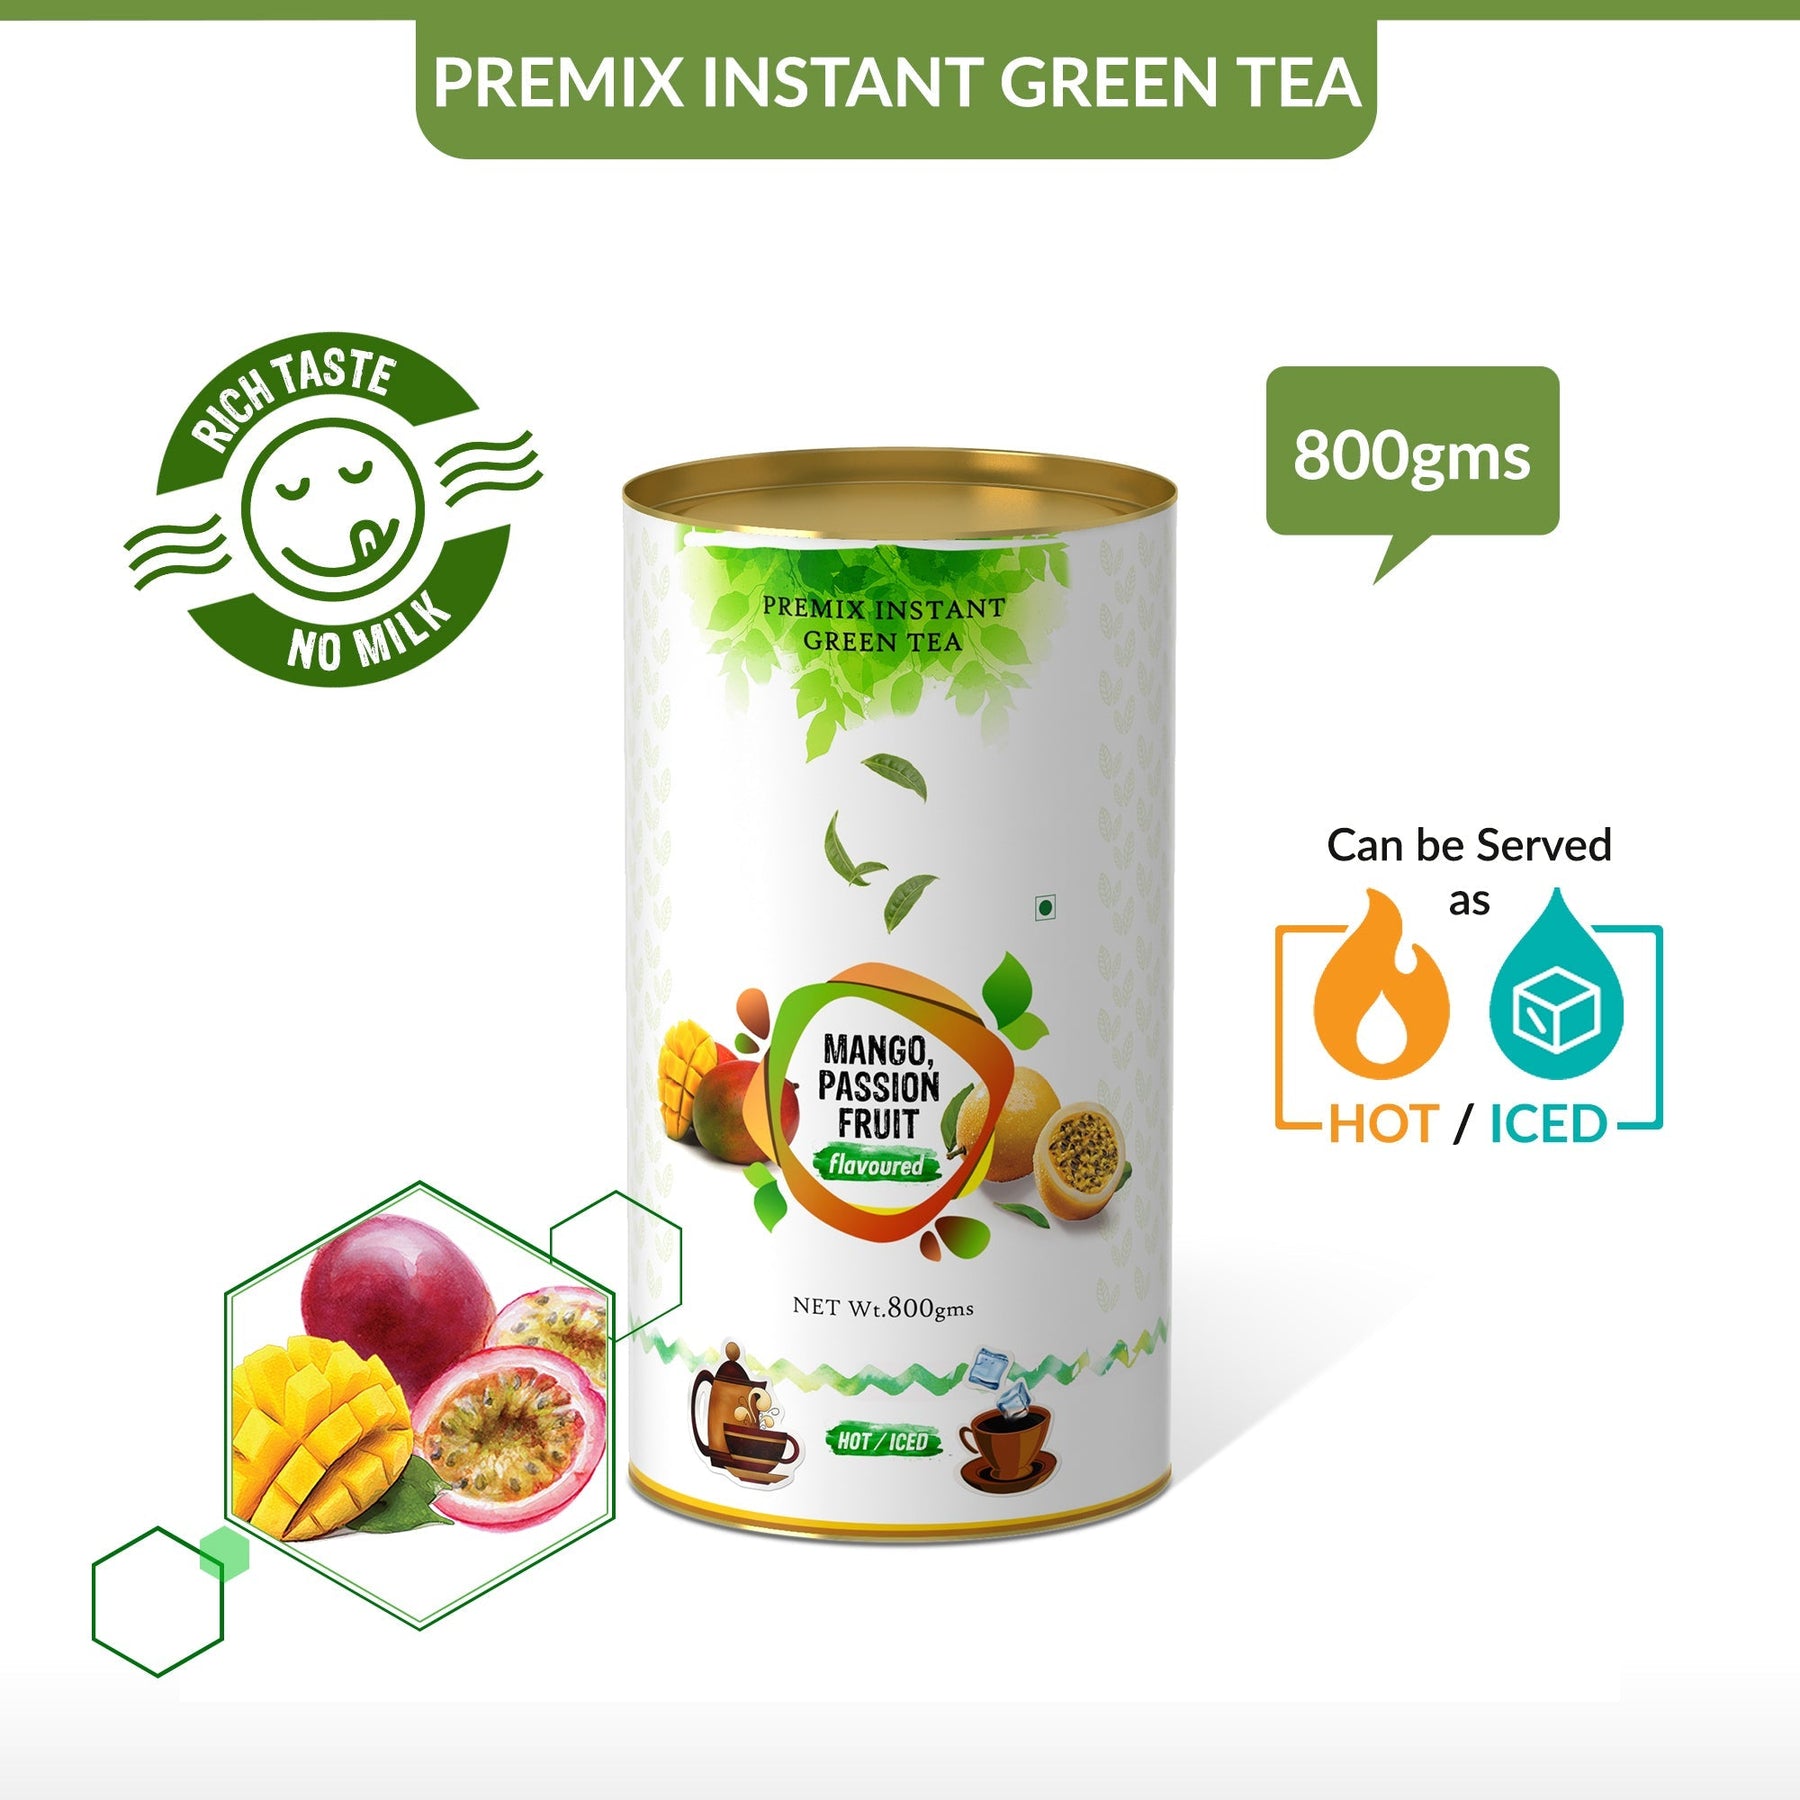 Mango Passion Fruit Flavored Instant Green Tea - 800 gms